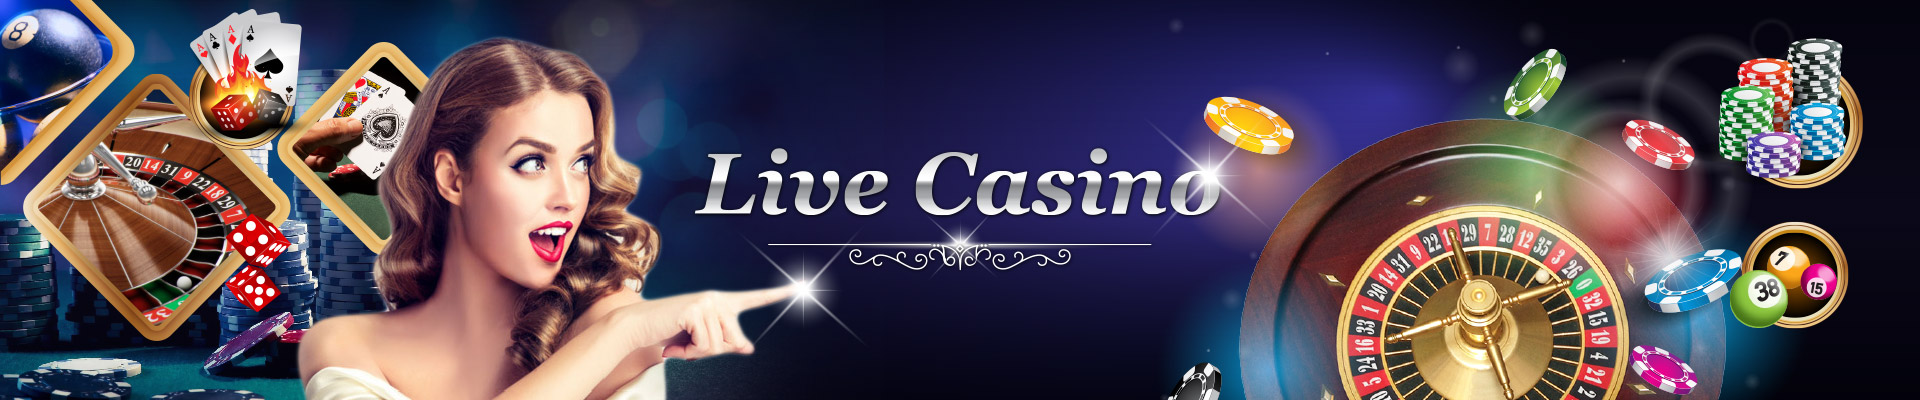 Online casino free signup bonus no deposit required malaysia Knock